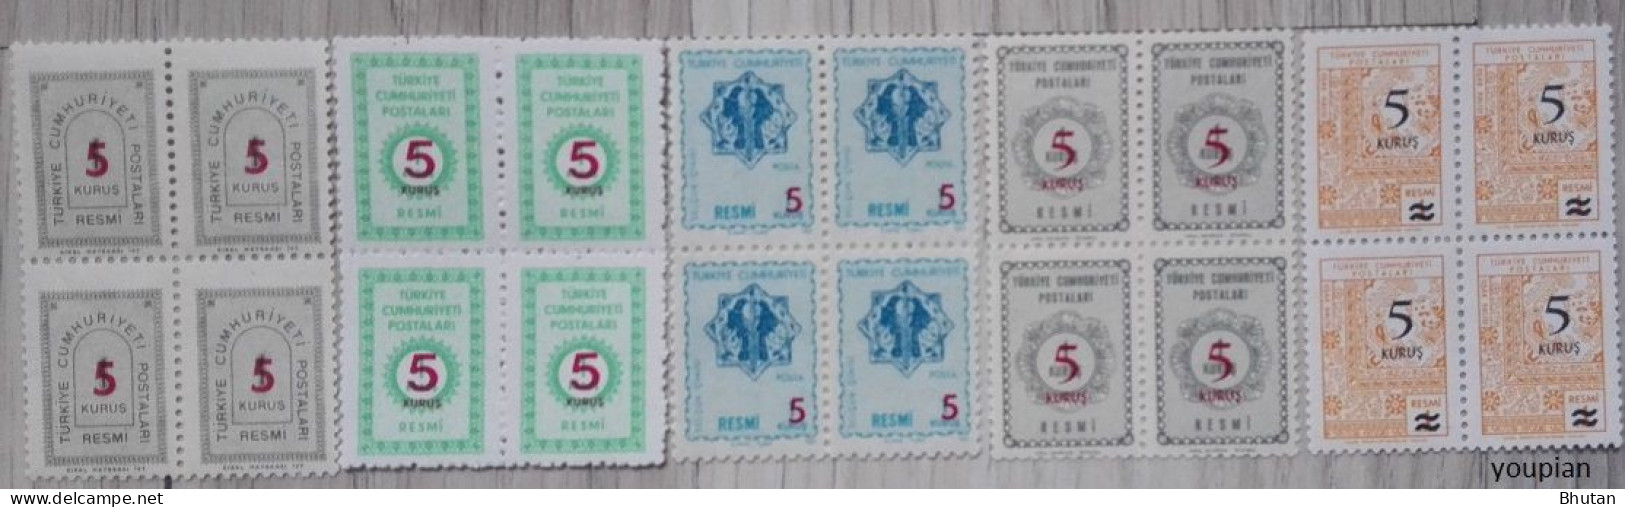 Türkiye 1977, Officials, MNH Stamps Set - Block Of Four - Unused Stamps